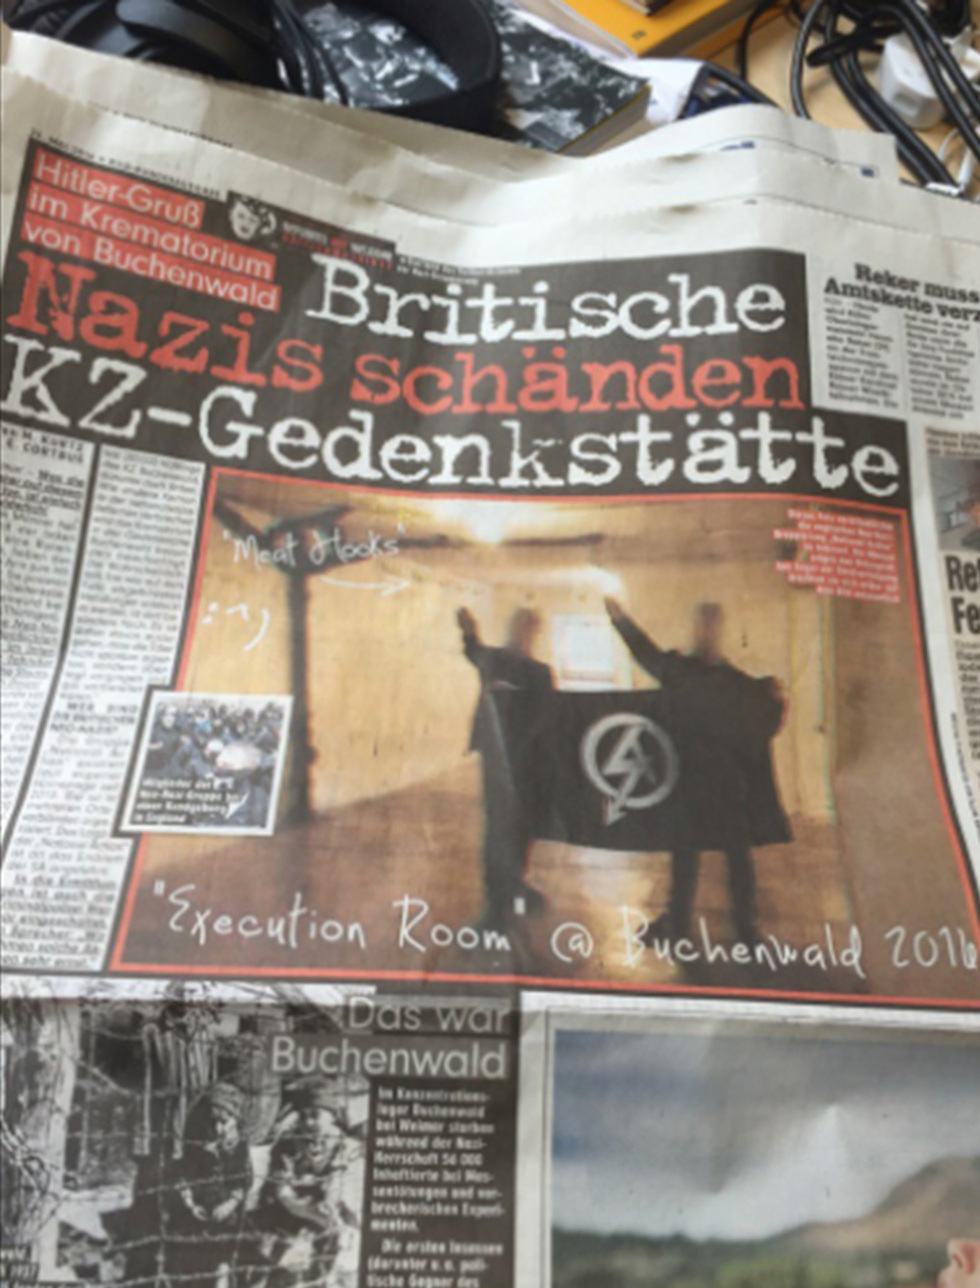 British neo-Nazis perform hitler salute at Buchenwald death camp (Photo: AP)